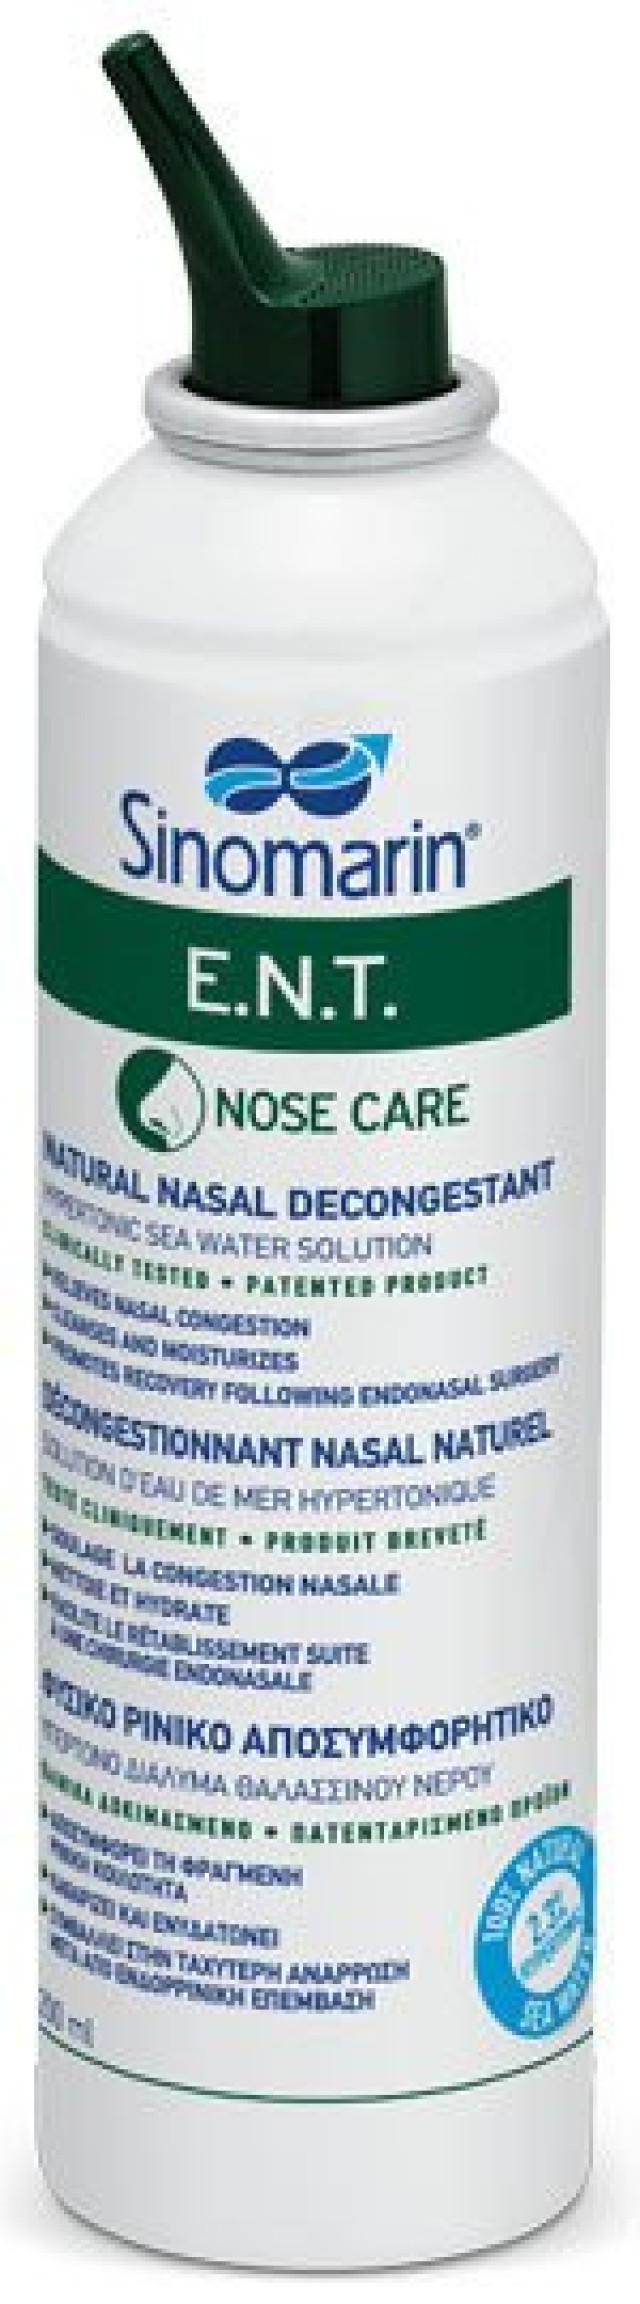 Sinomarin Nose Care E.N.T. 200ml